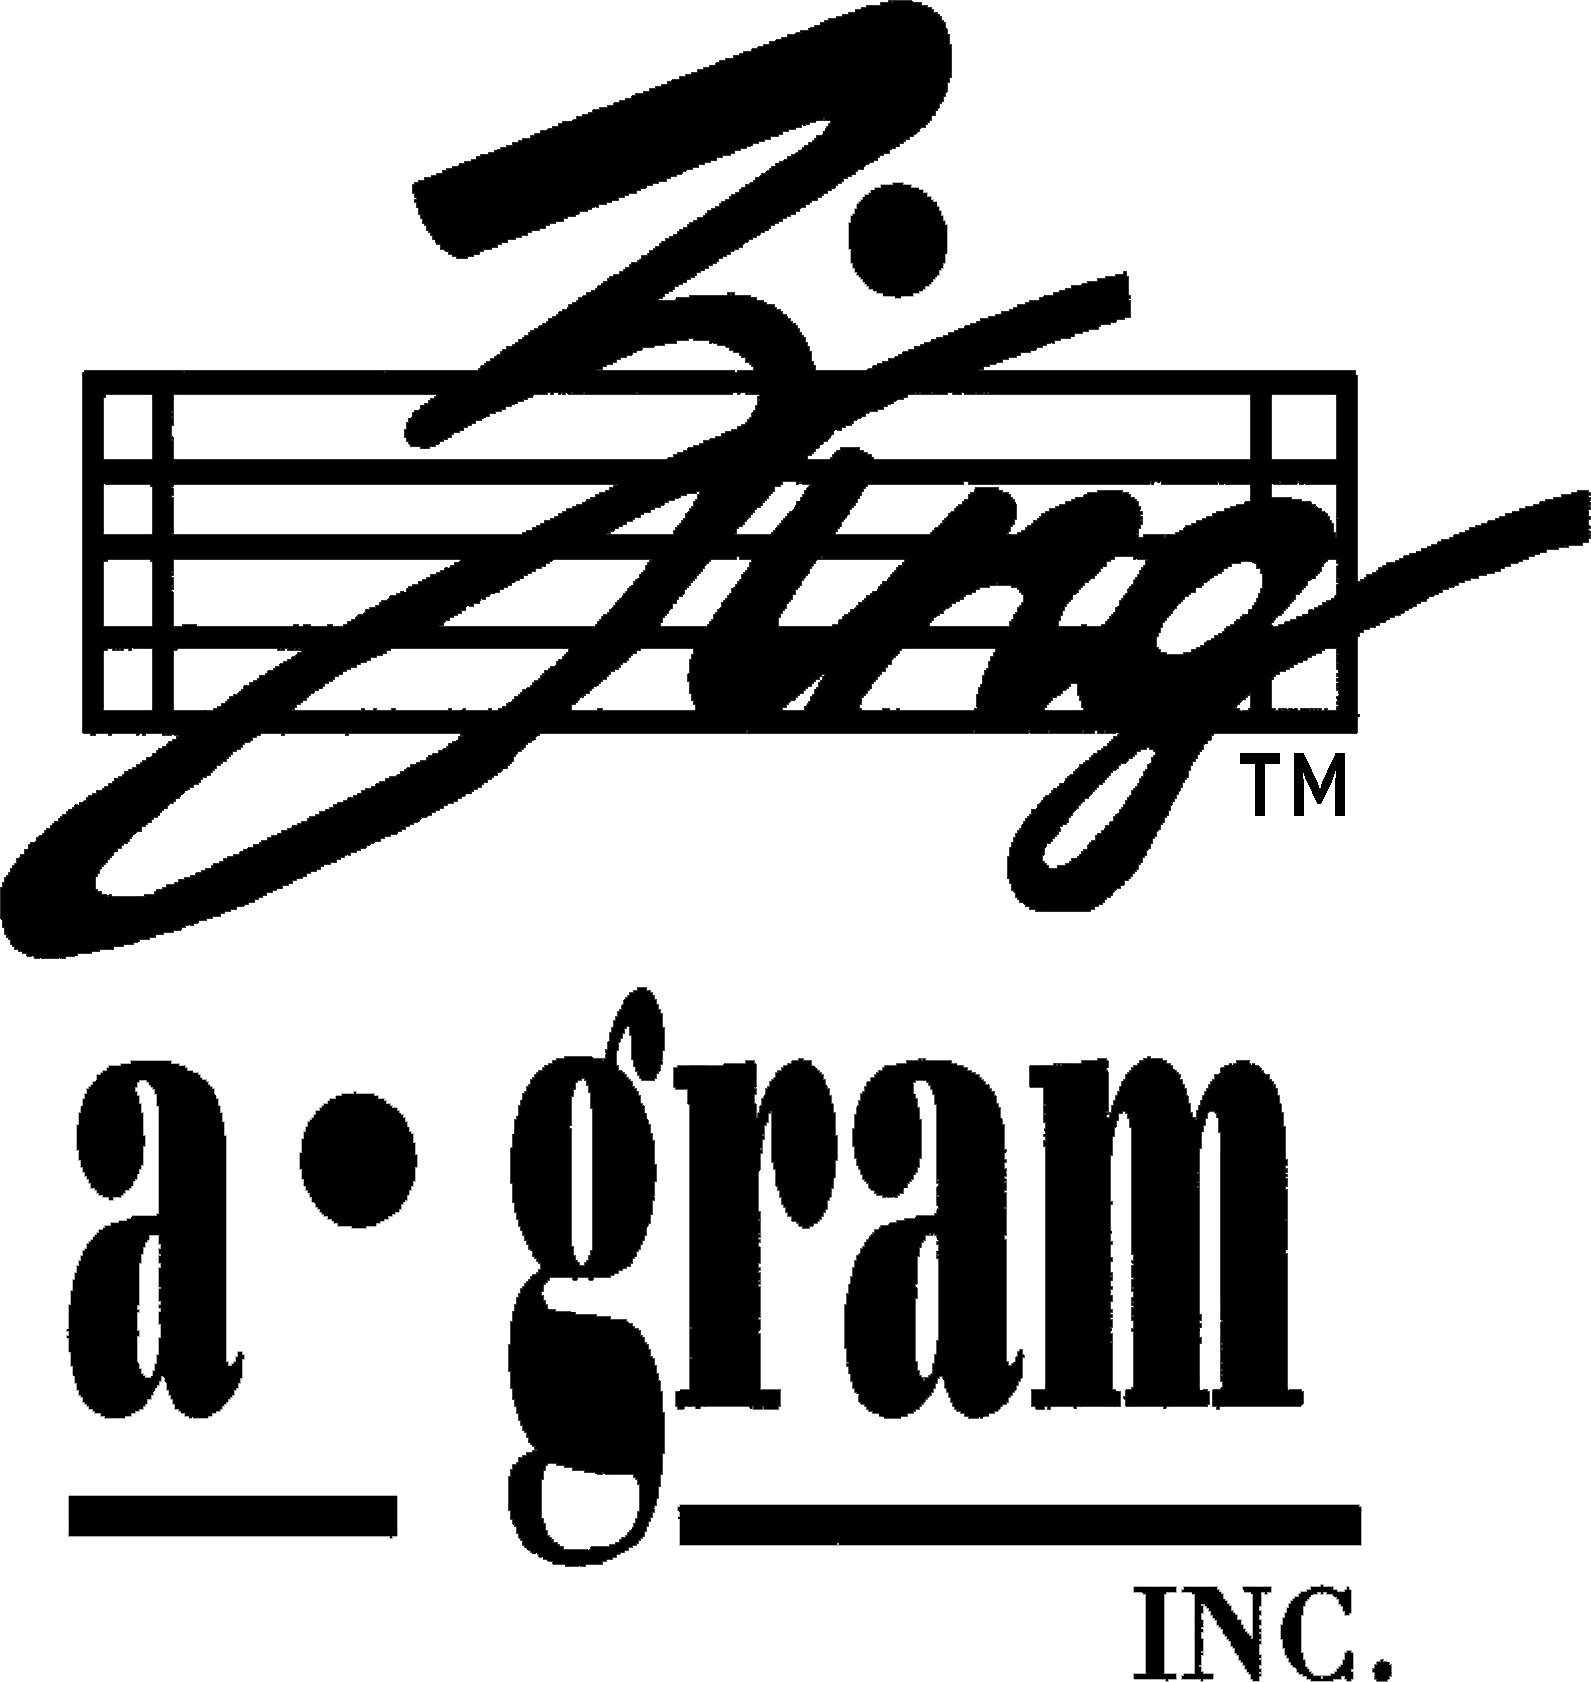 Zing-A-Gram Event Planning